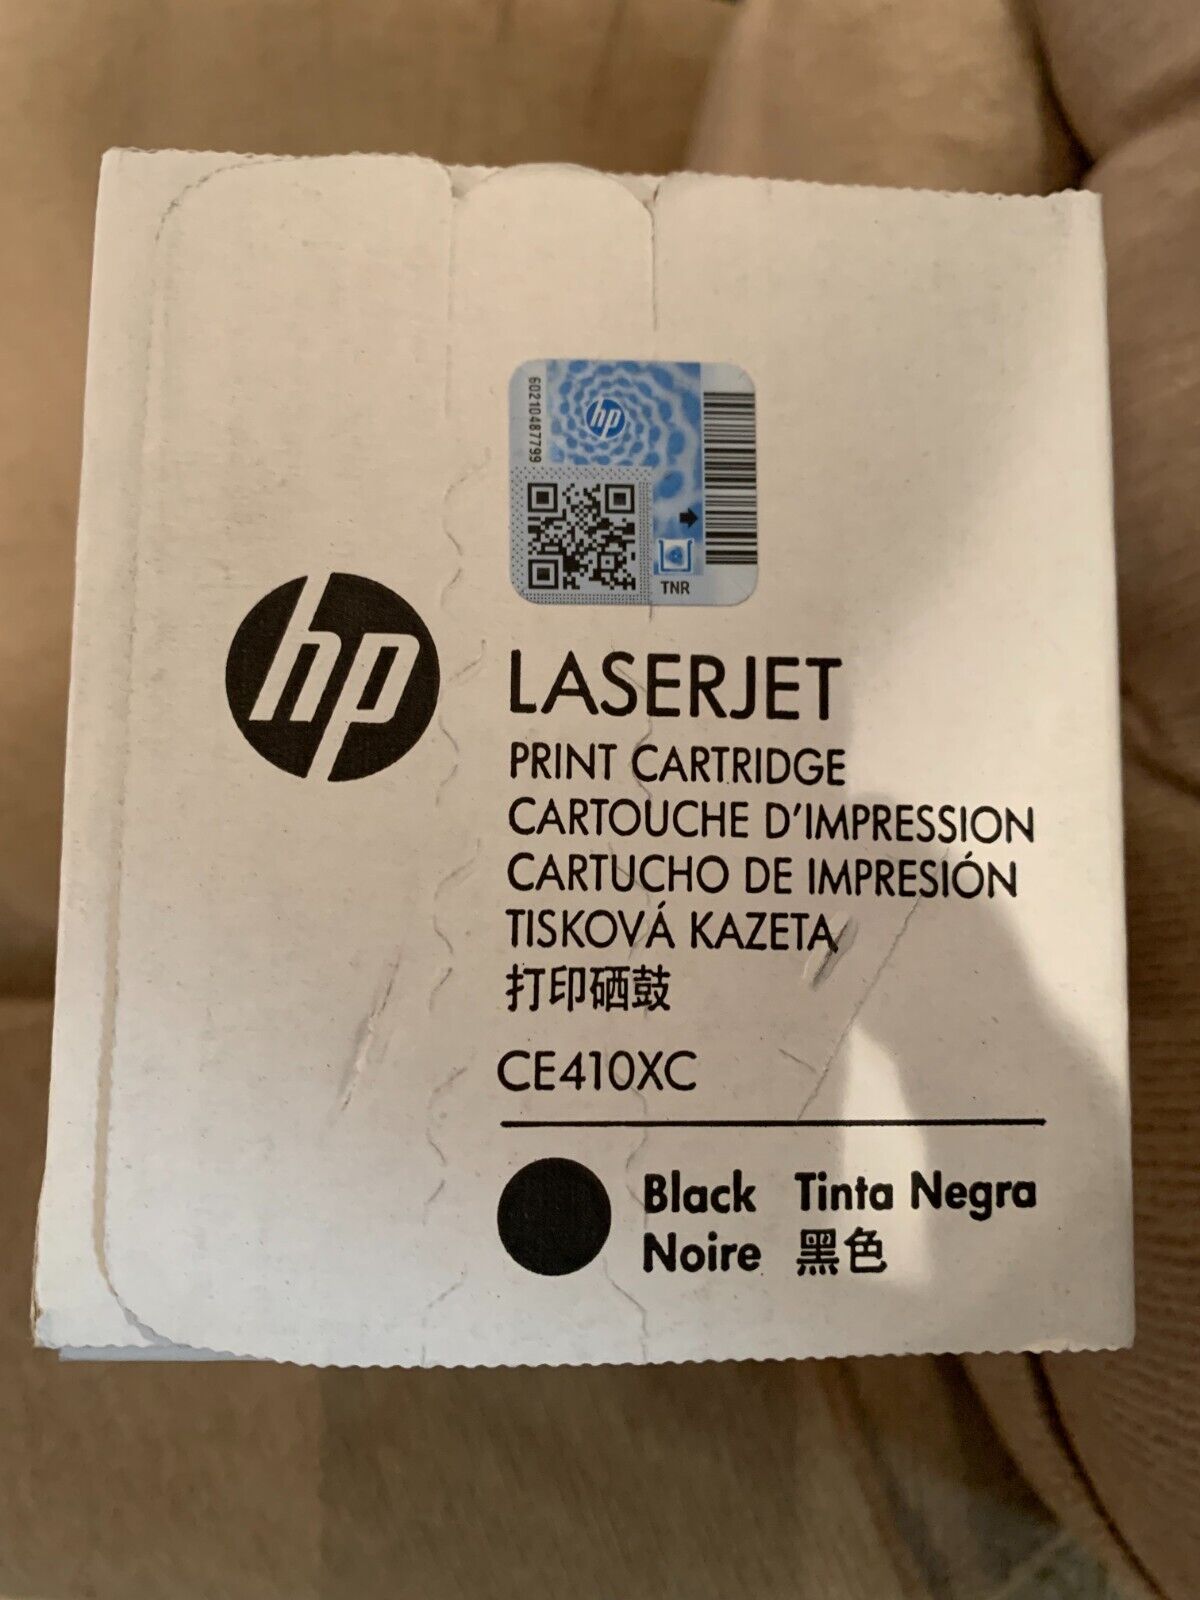 (1 New/Sealed) Geniune HP LaserJet 305X (CE410XC) High Volume